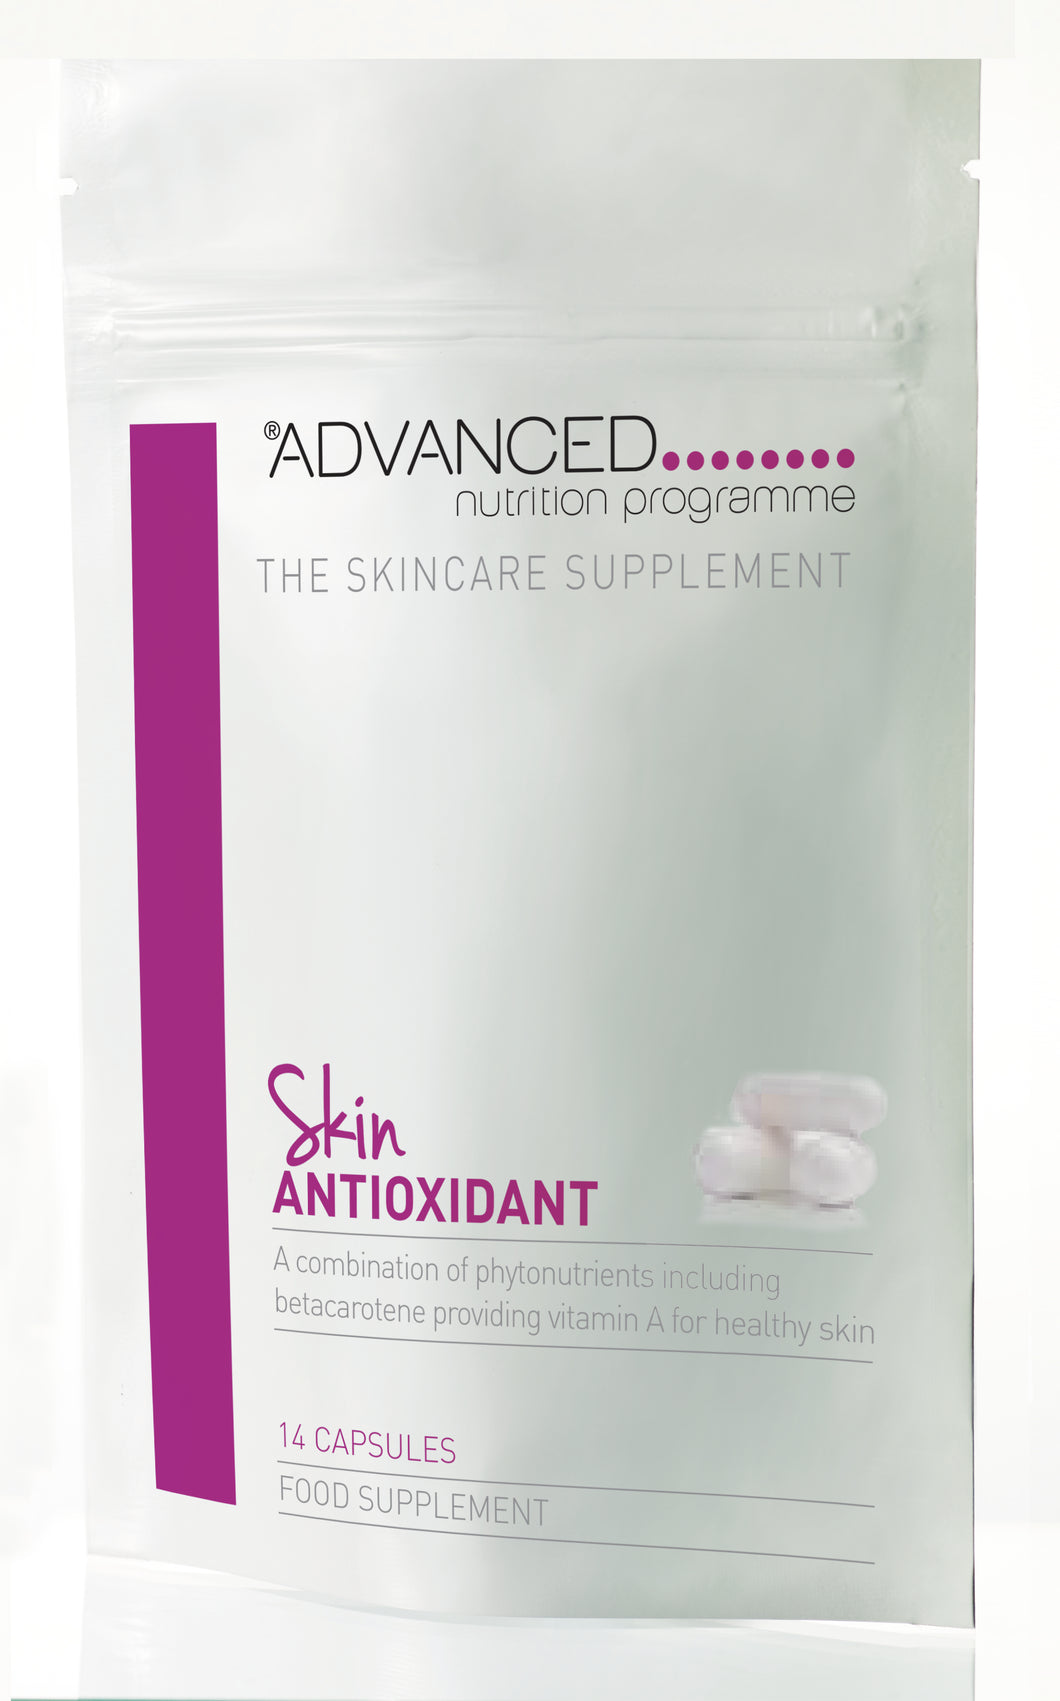 Advanced Nutrition Programme Mini Skin Antioxidant